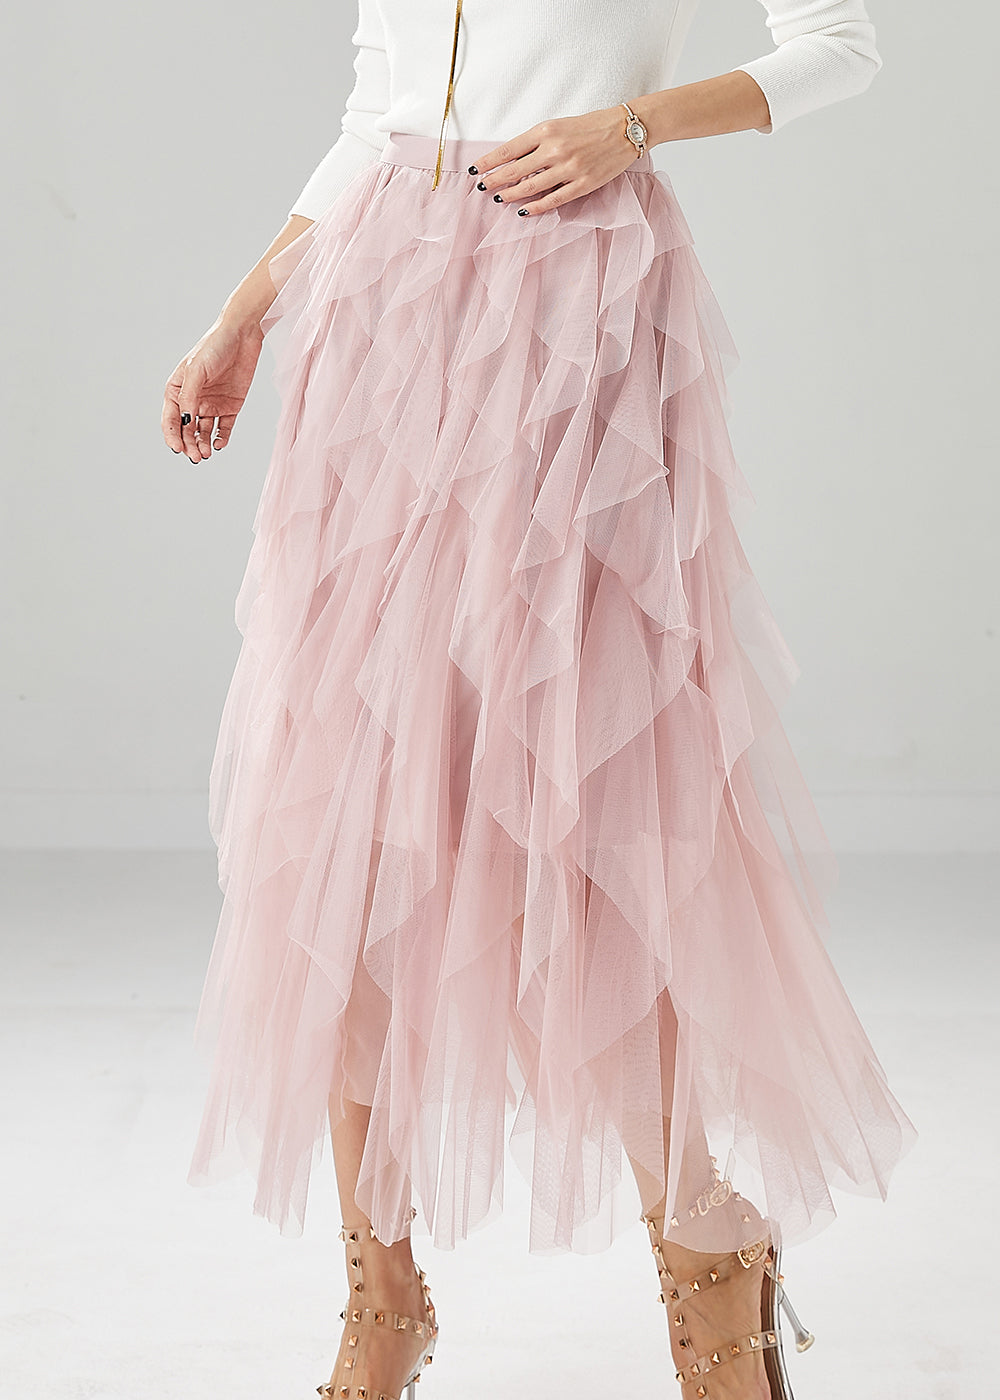 Elegant Pink High Waist Ruffles Tulle Skirt Summer